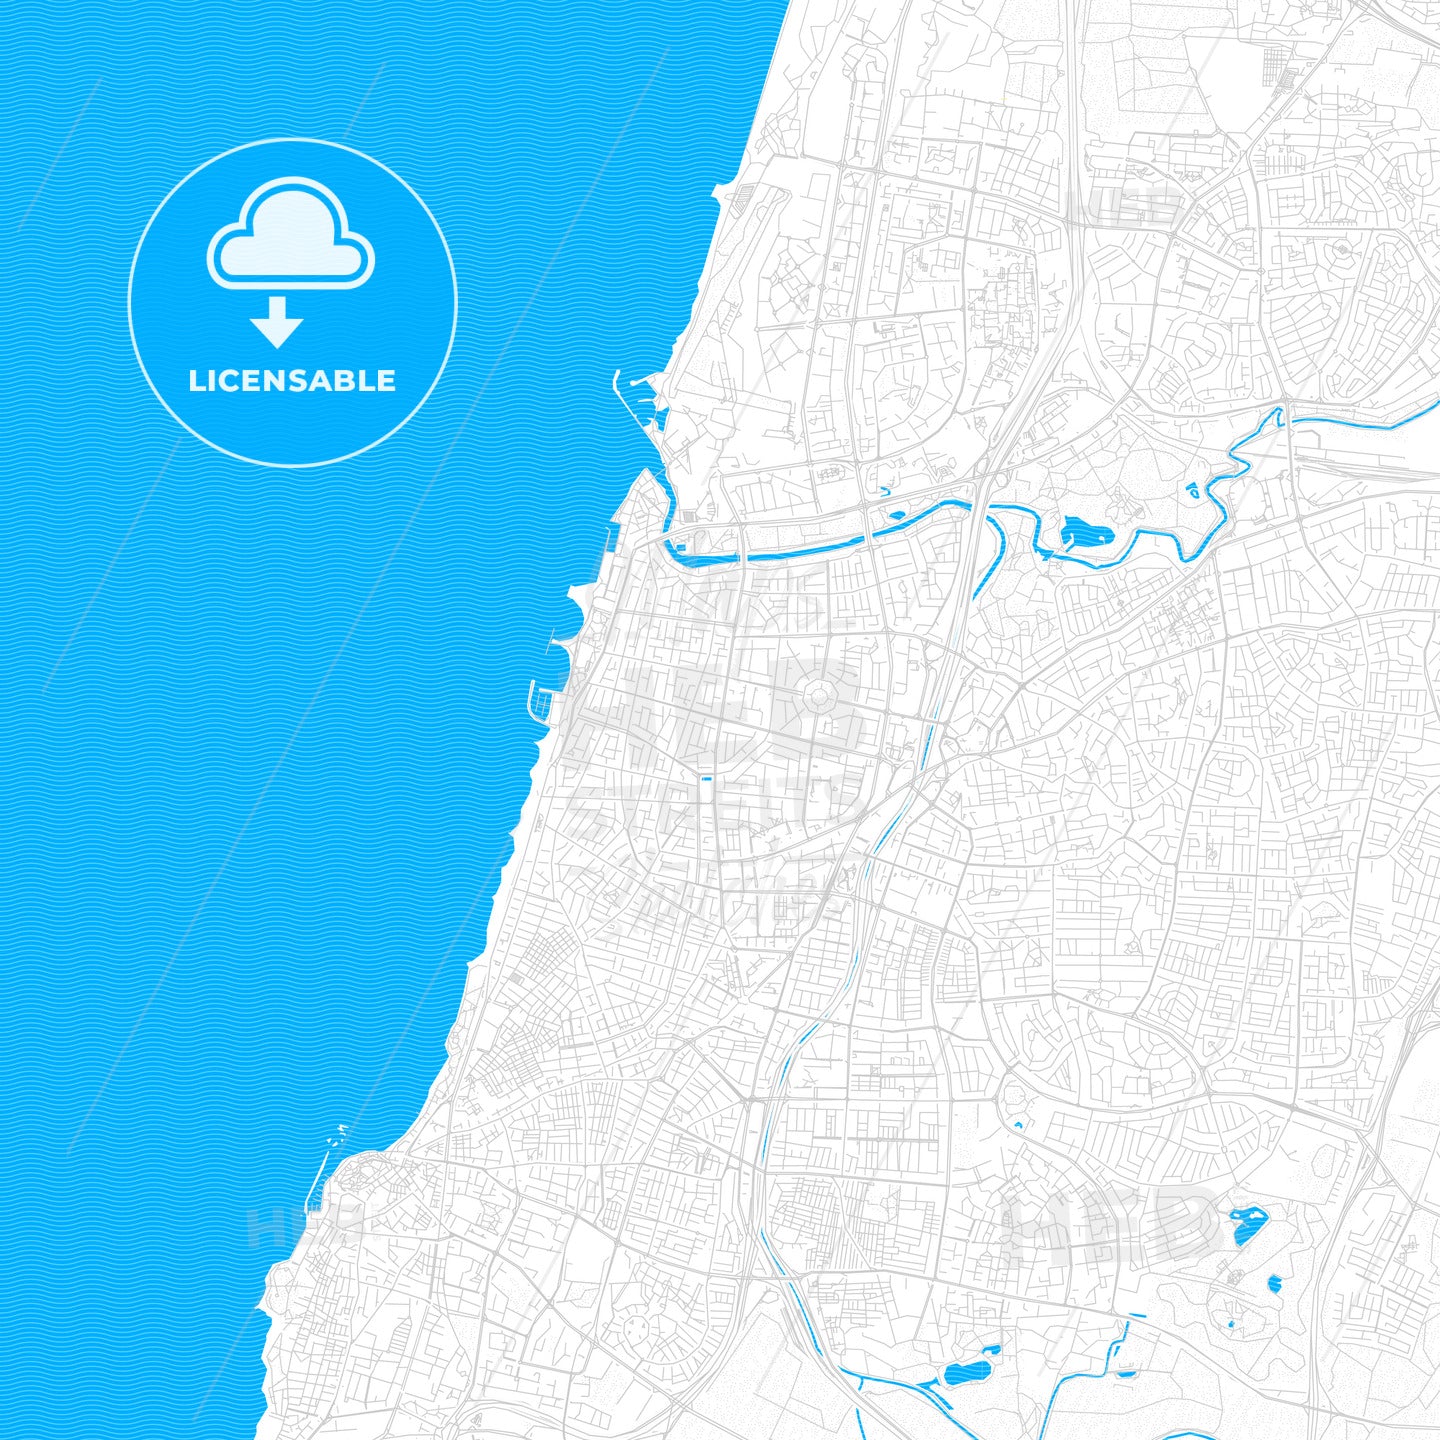 Tel Aviv-Yafo, Israel PDF vector map with water in focus